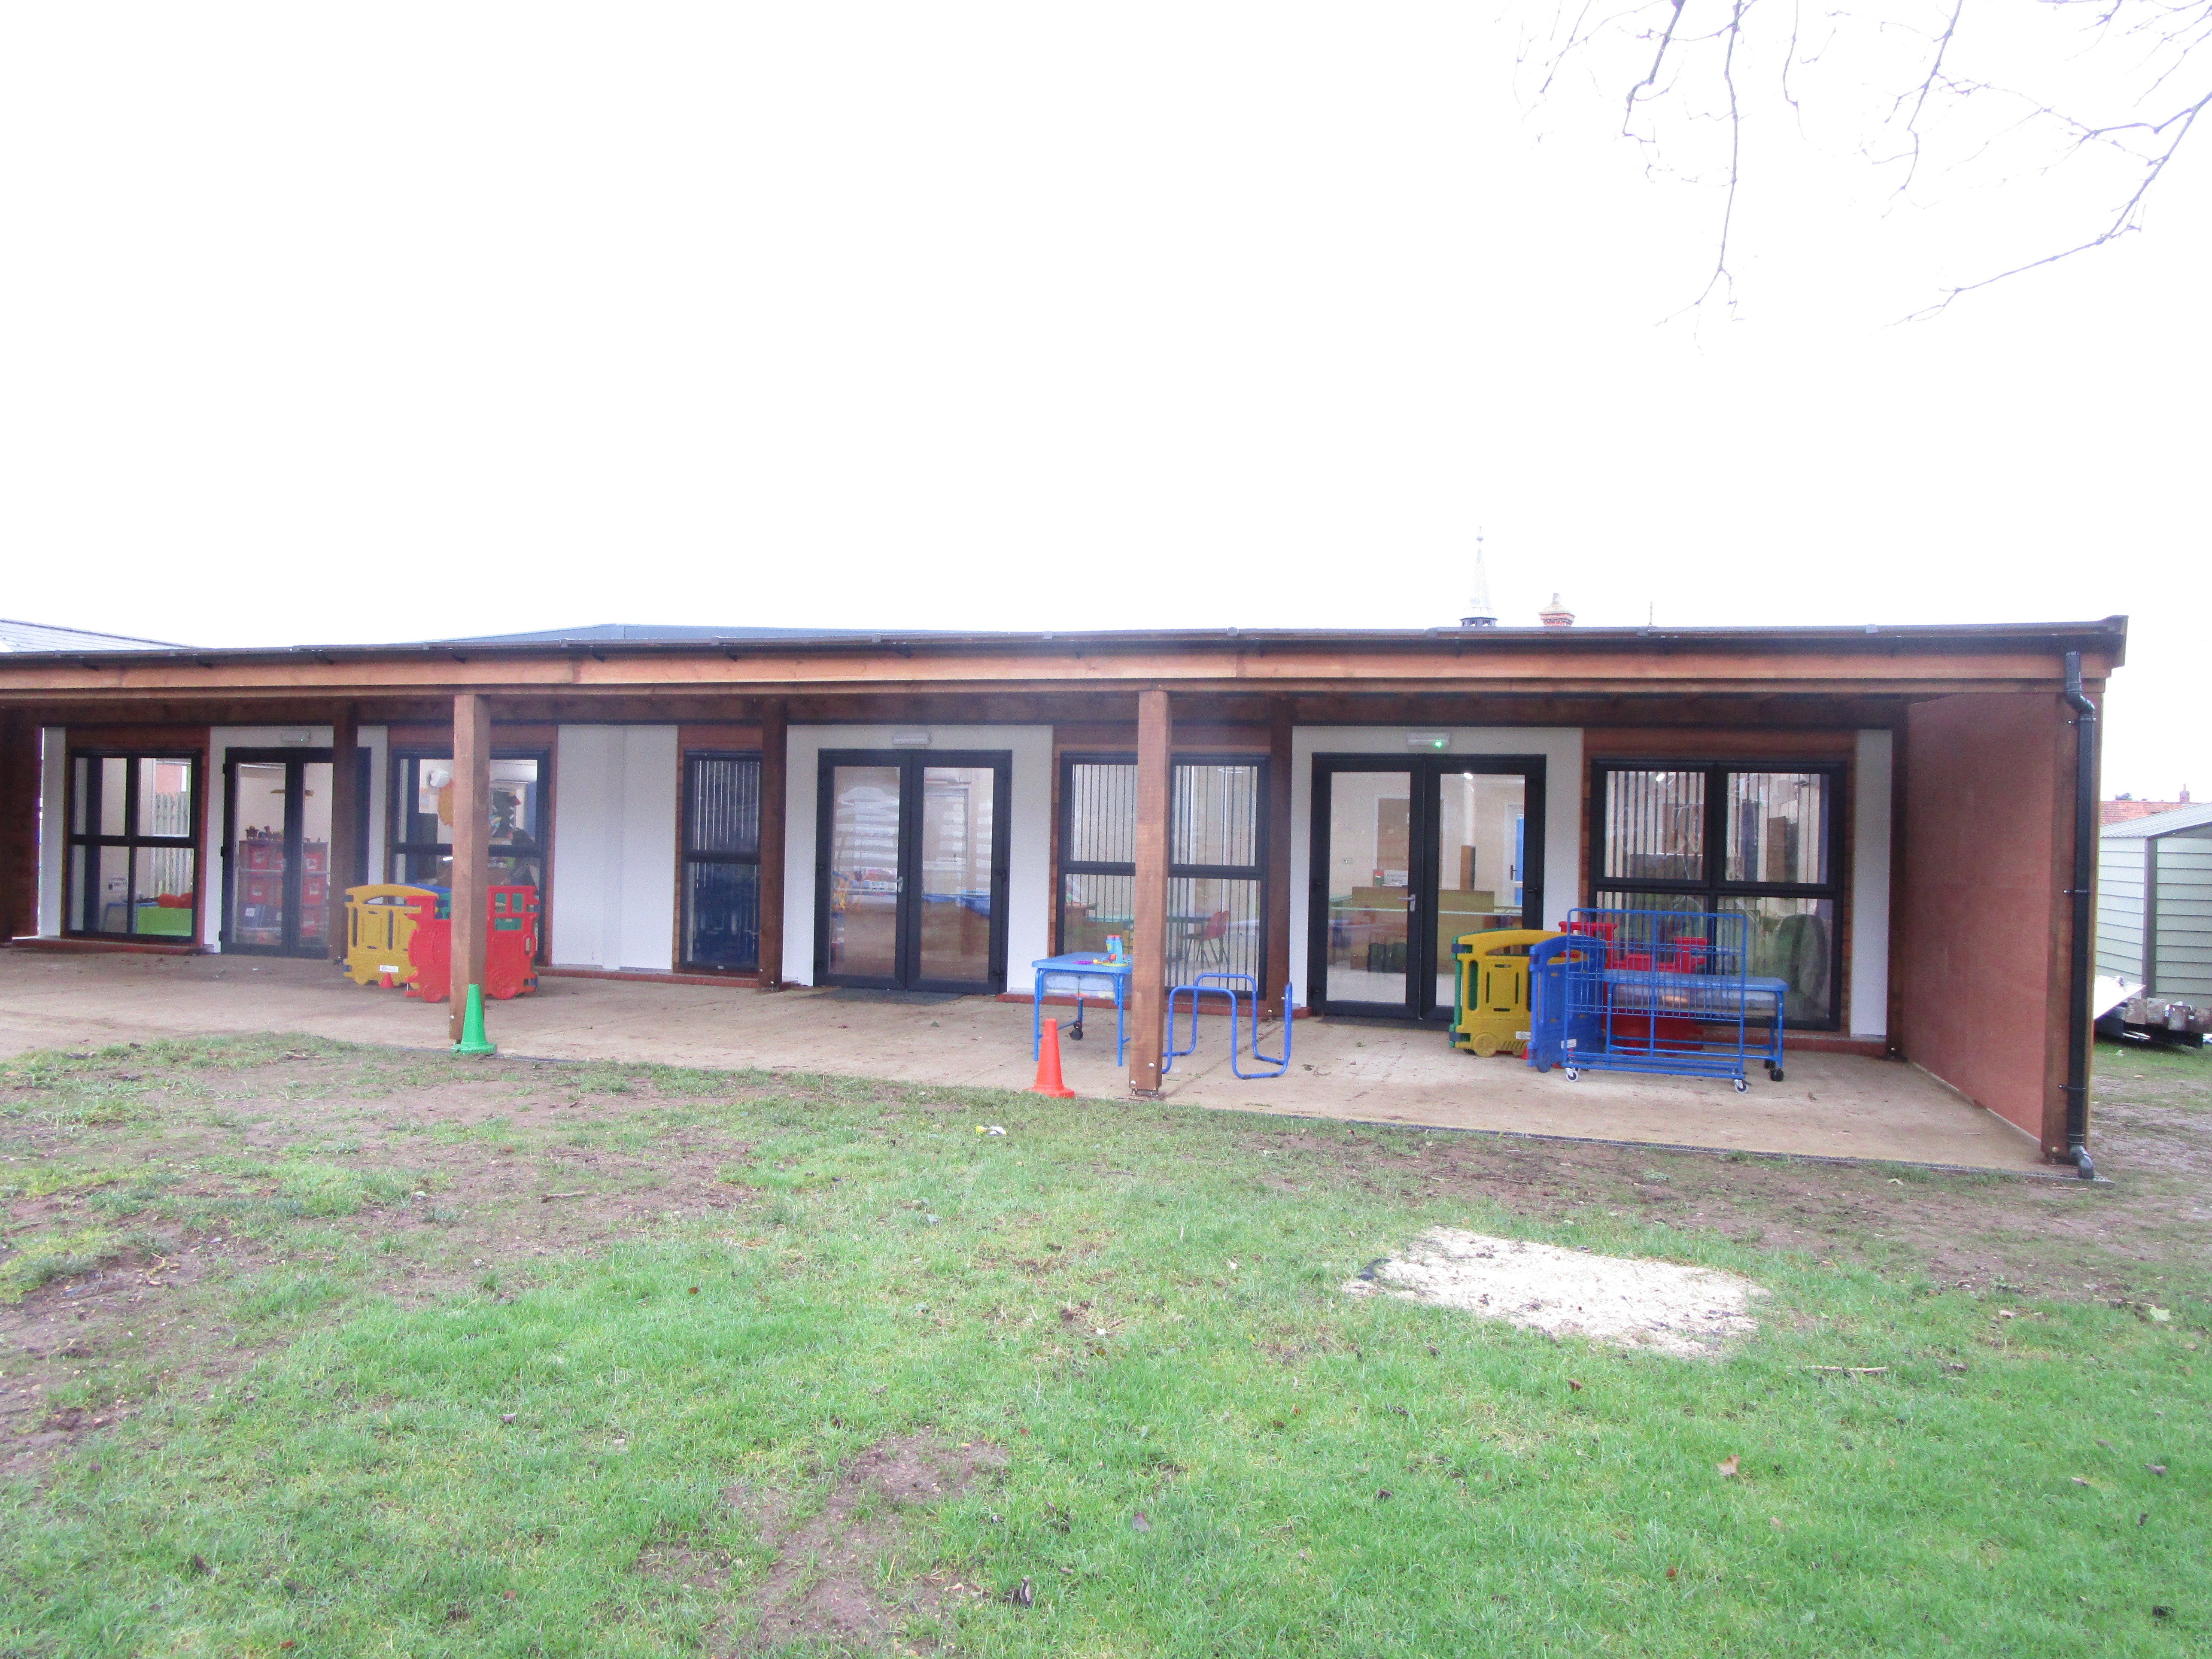 New build school classrooms and nursery